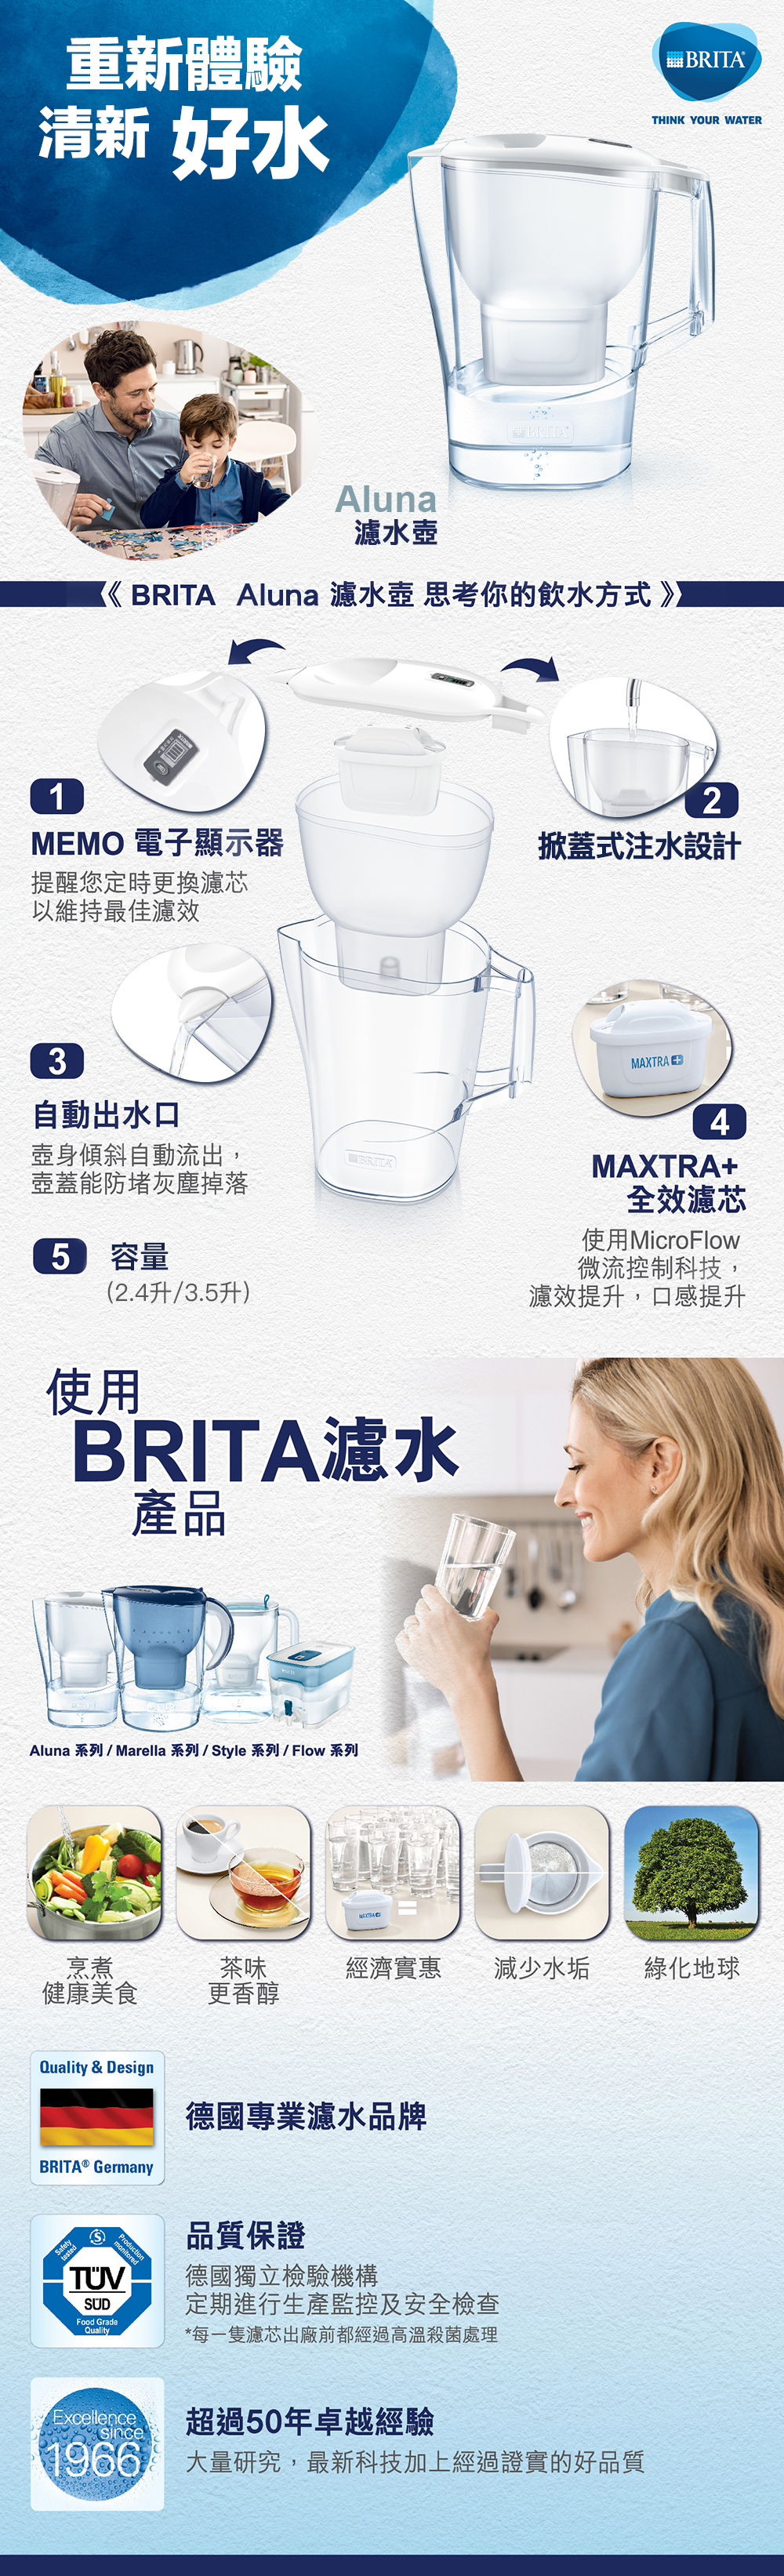 water BRITA Aluna Homestuff | (3.5L/2.4L) jugs filter